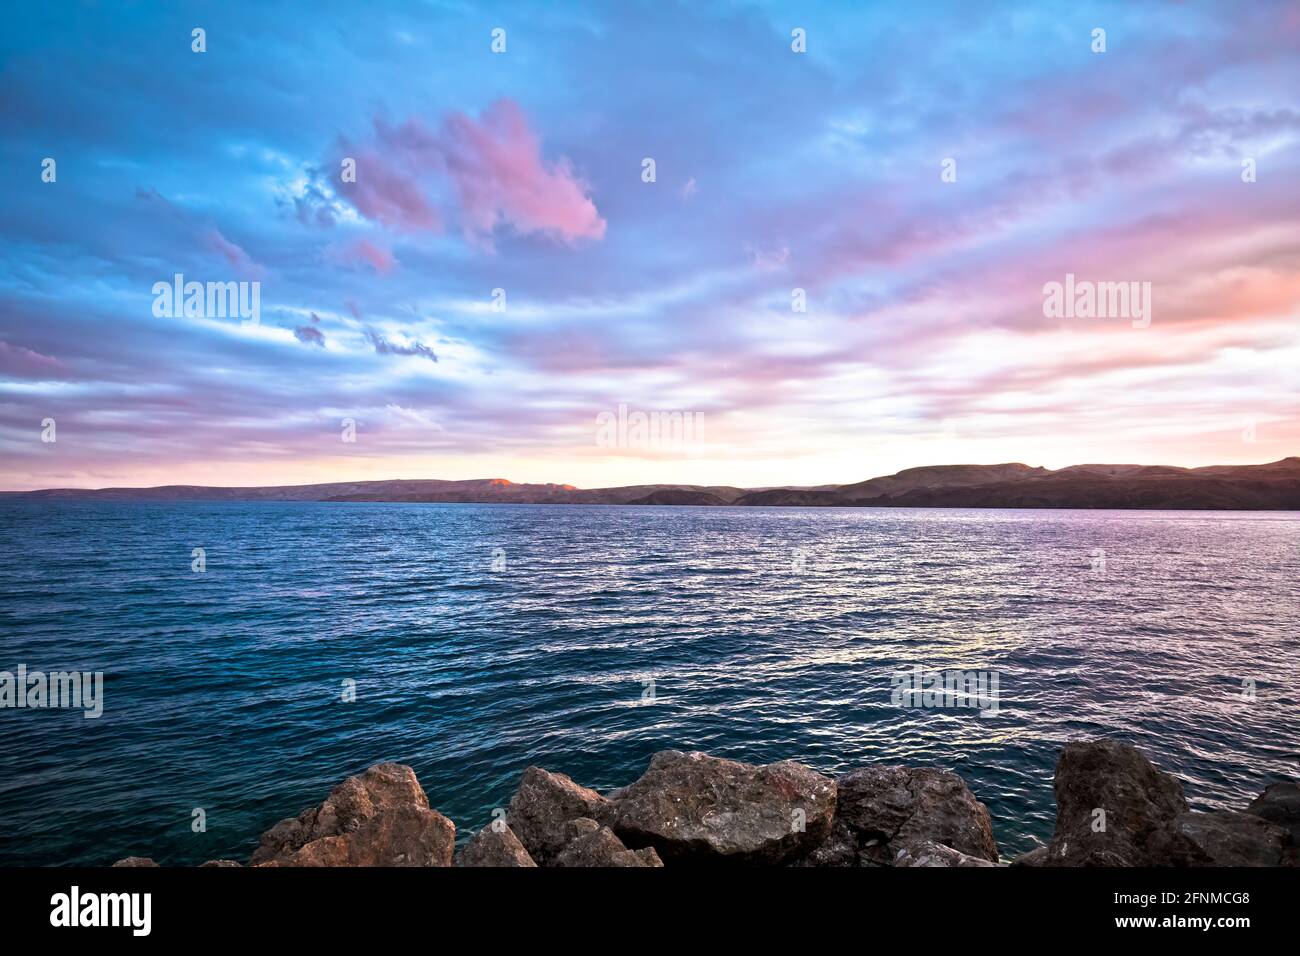 Meer und bunten Sonnenuntergang Himmel Blick, Landschaft der Adria in Kroatien Stockfoto